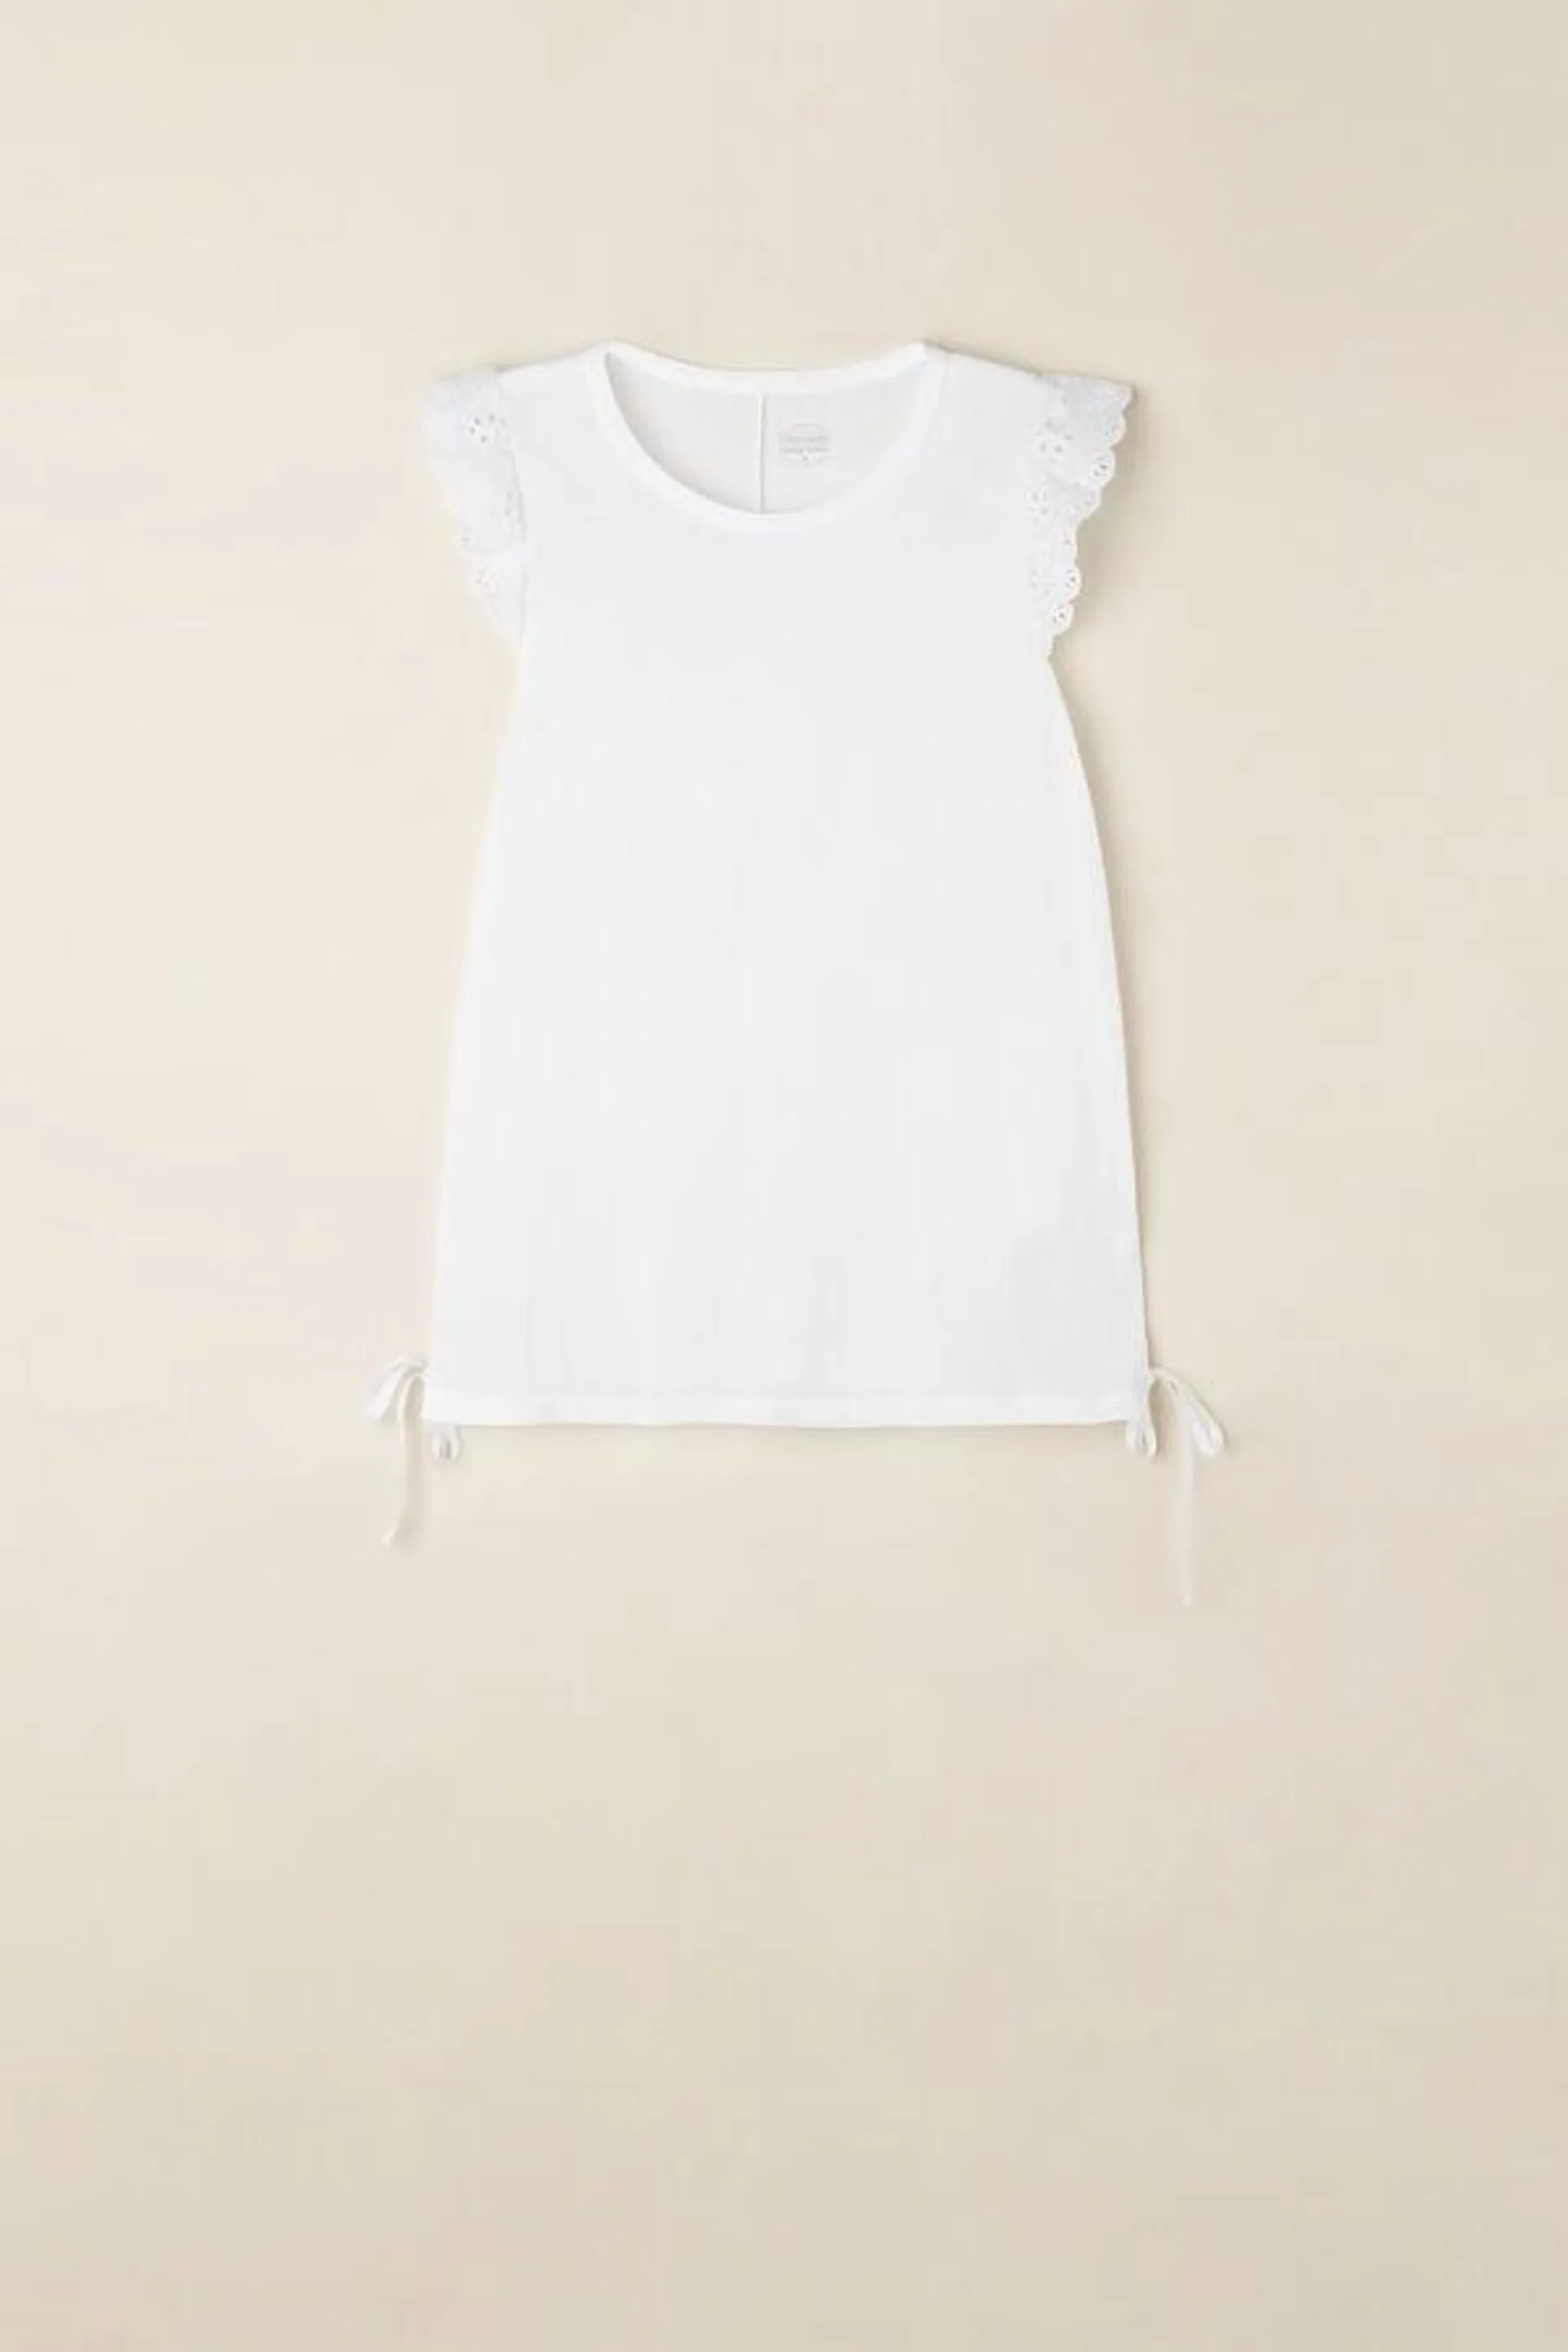 Hello Sunshine Ultrafresh Supima® Cotton Vest Top